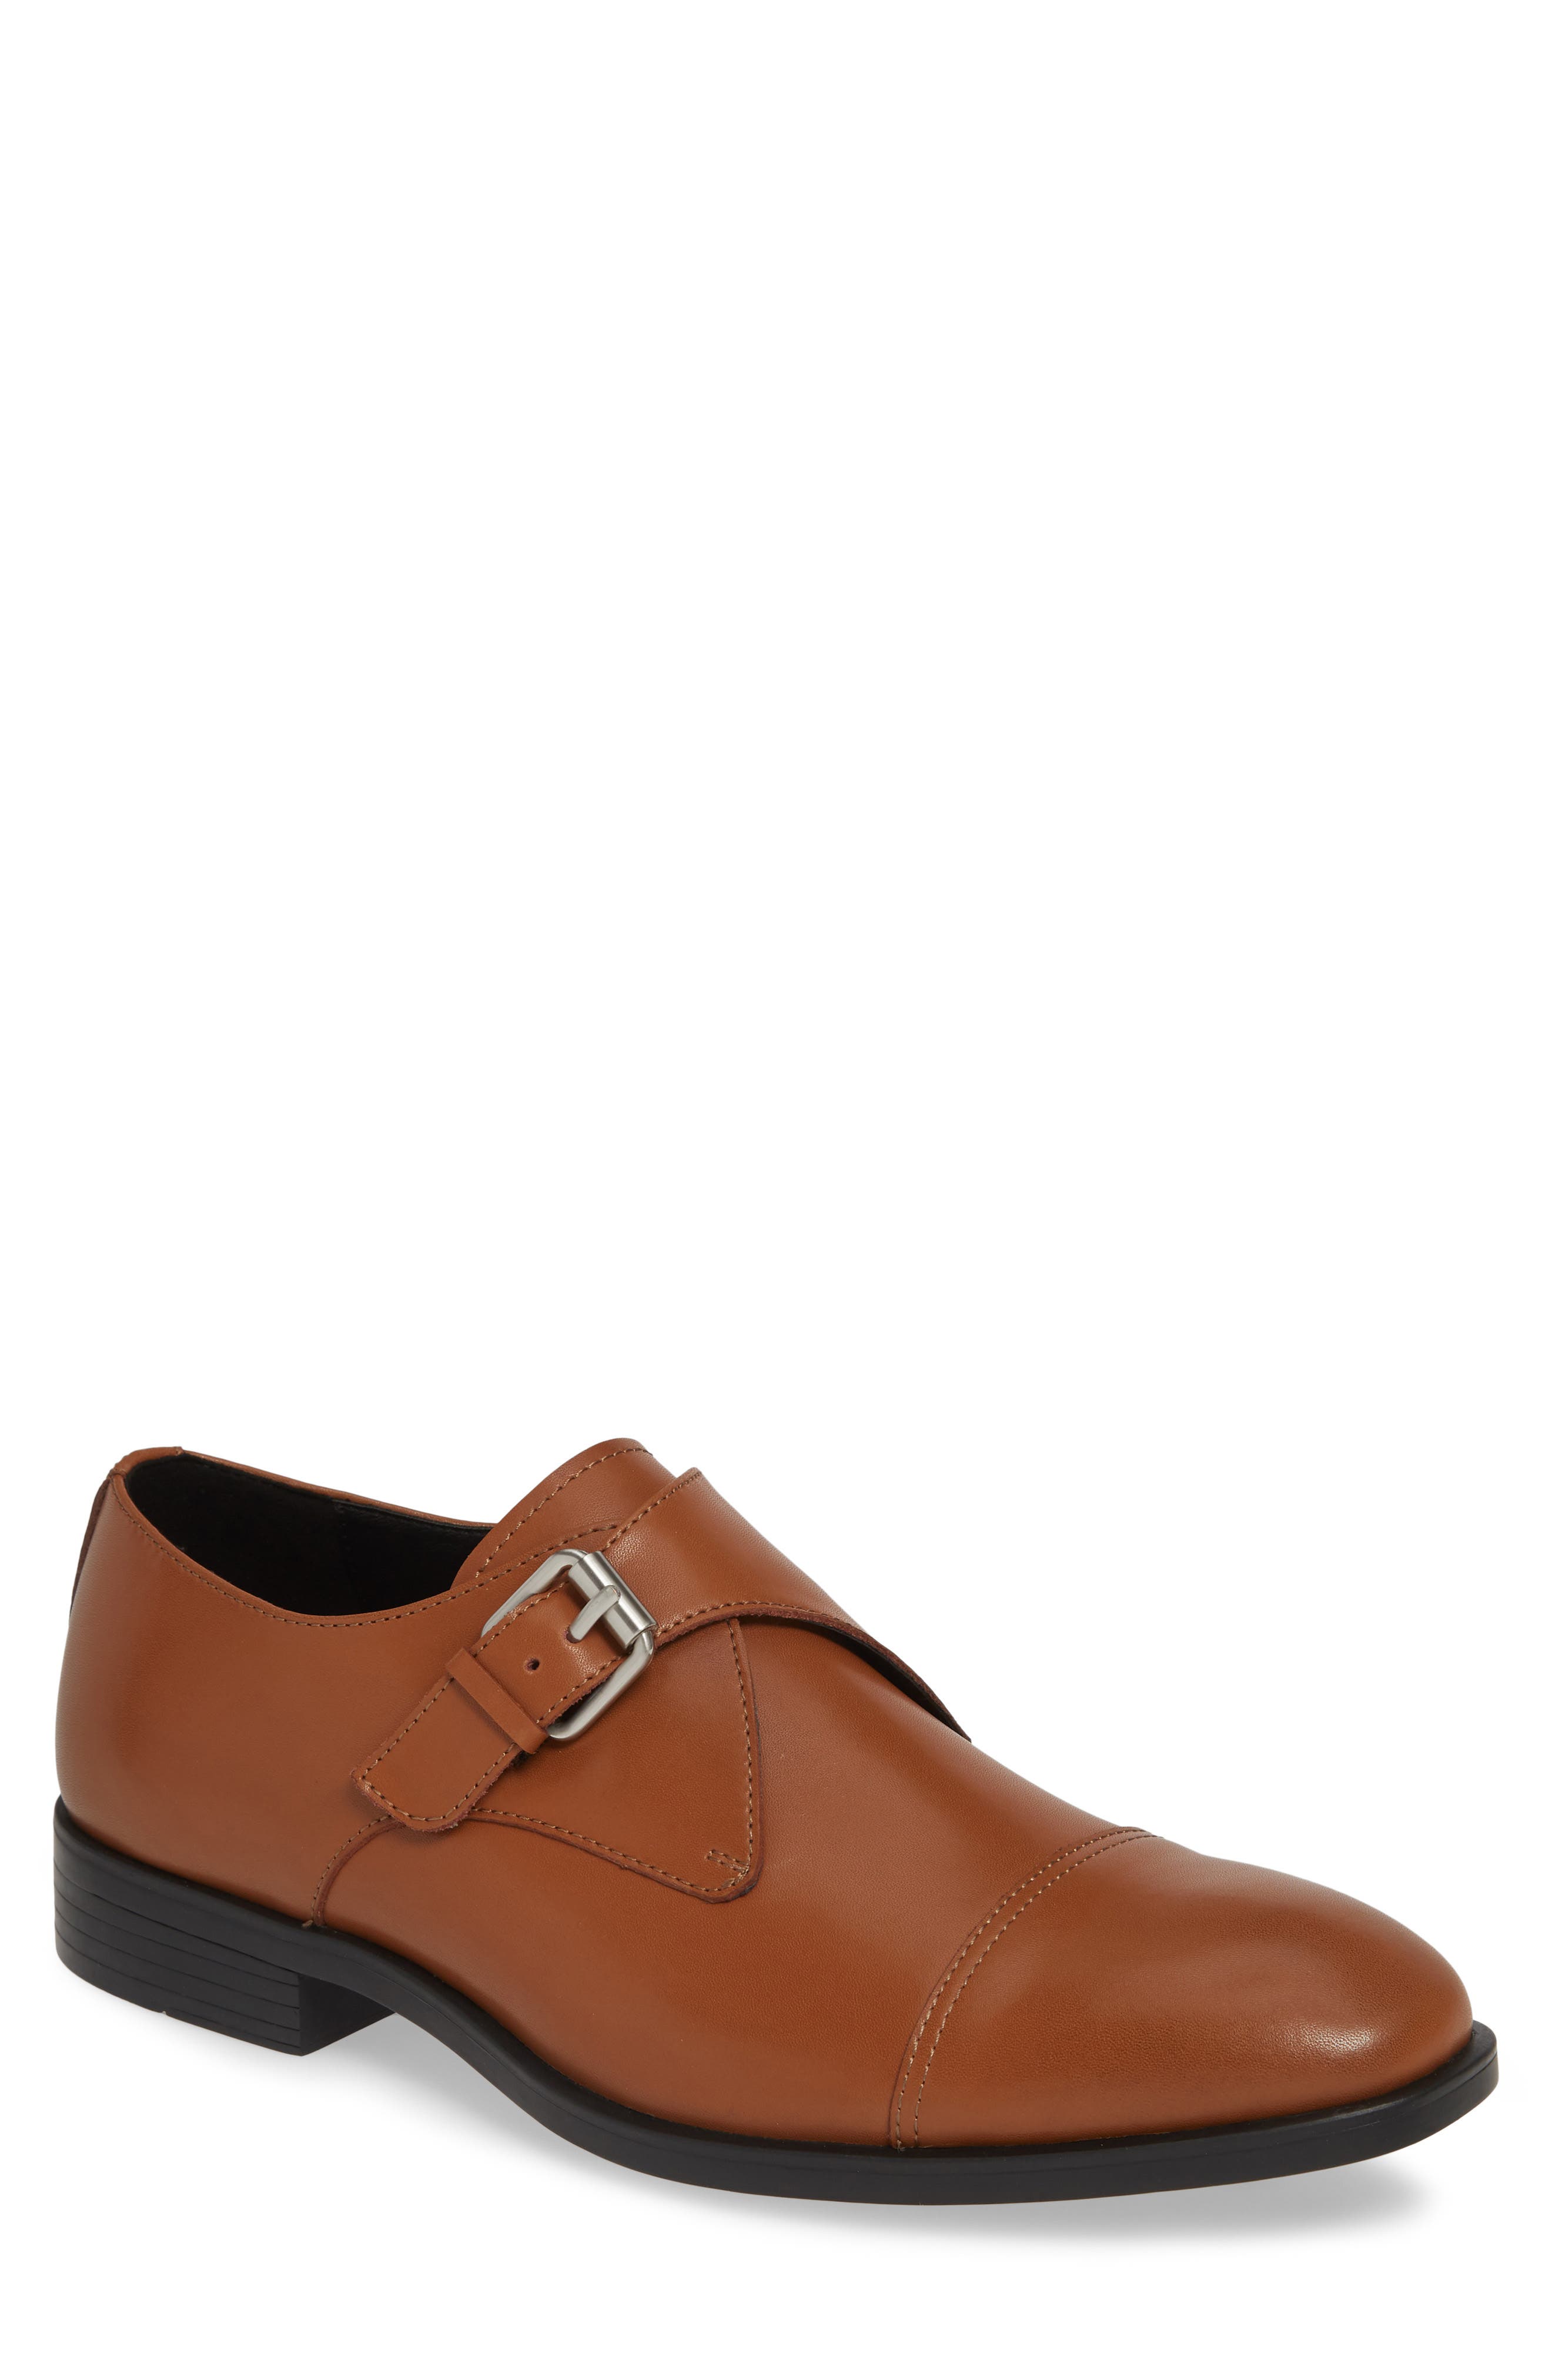 UPC 192675341141 product image for Men's Calvin Klein Channer Monk Strap Shoe, Size 7 M - Brown | upcitemdb.com